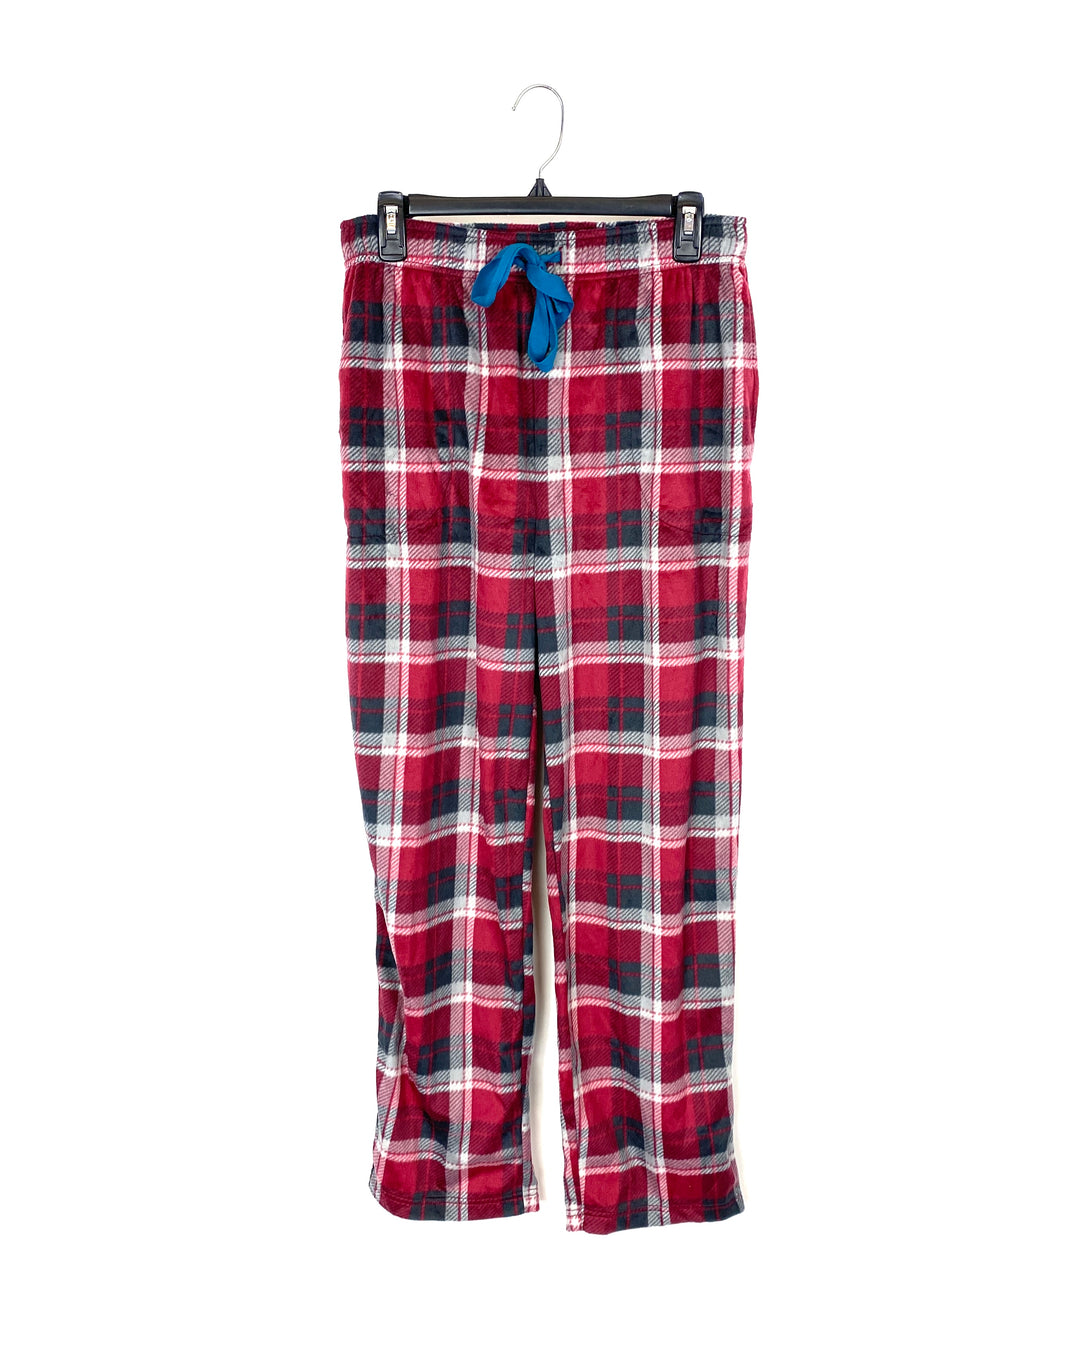 MENS Red Plaid Fleece Pajama Pants